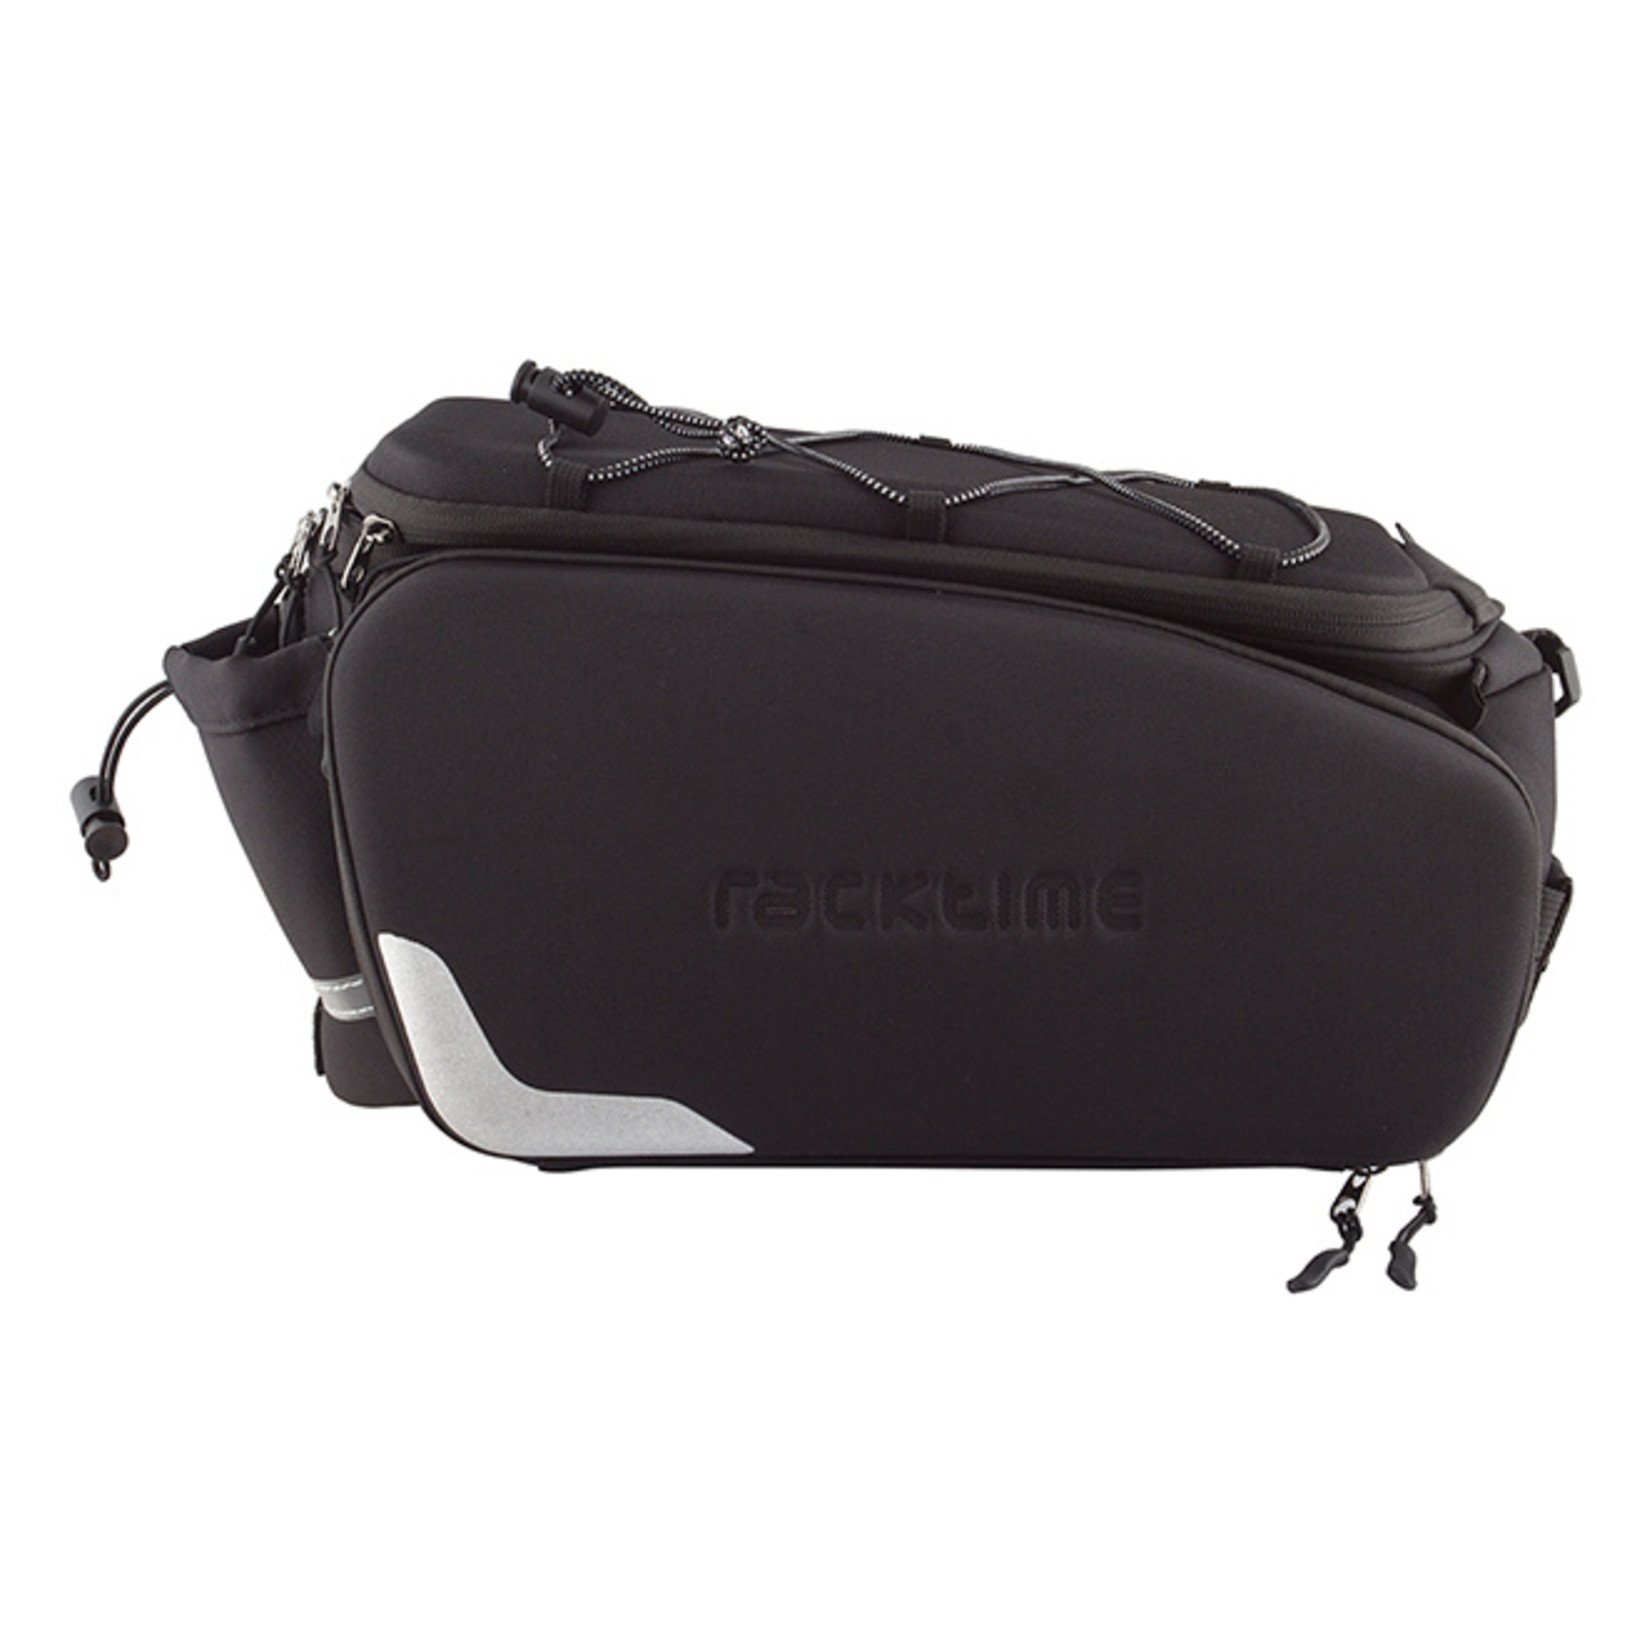 https://cdn.shoplightspeed.com/shops/649548/files/41082776/1652x1652x1/racktime-racktime-odin-trunk-bag-for-snapit-racks.jpg